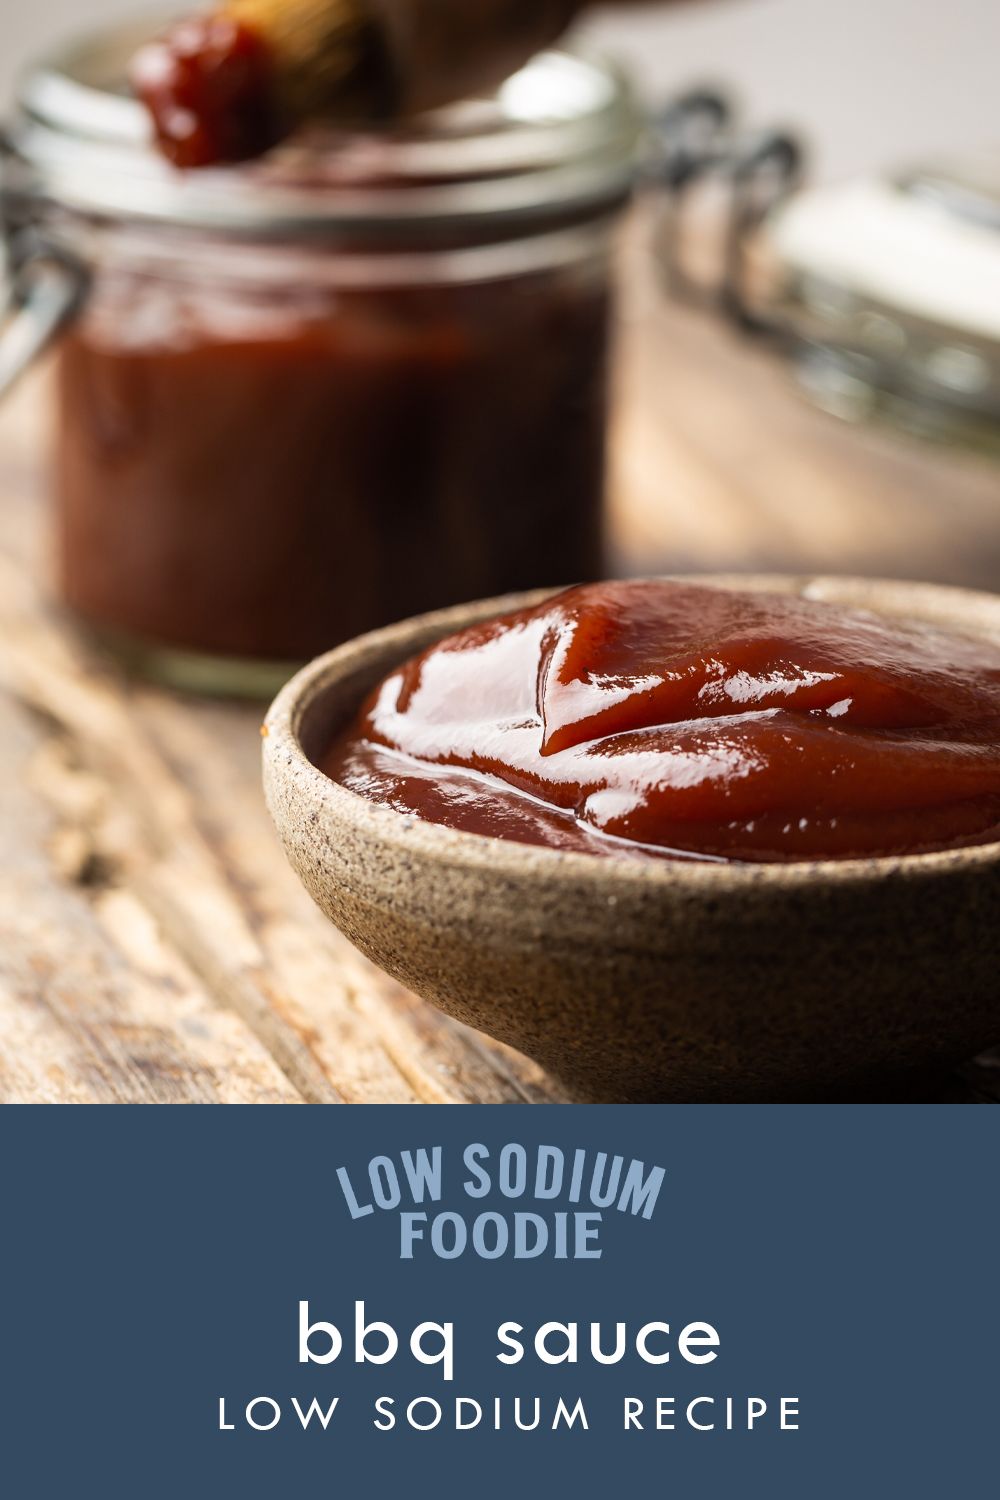 Low Sodium Barbecue Sauce â The Low Sodium Foodie